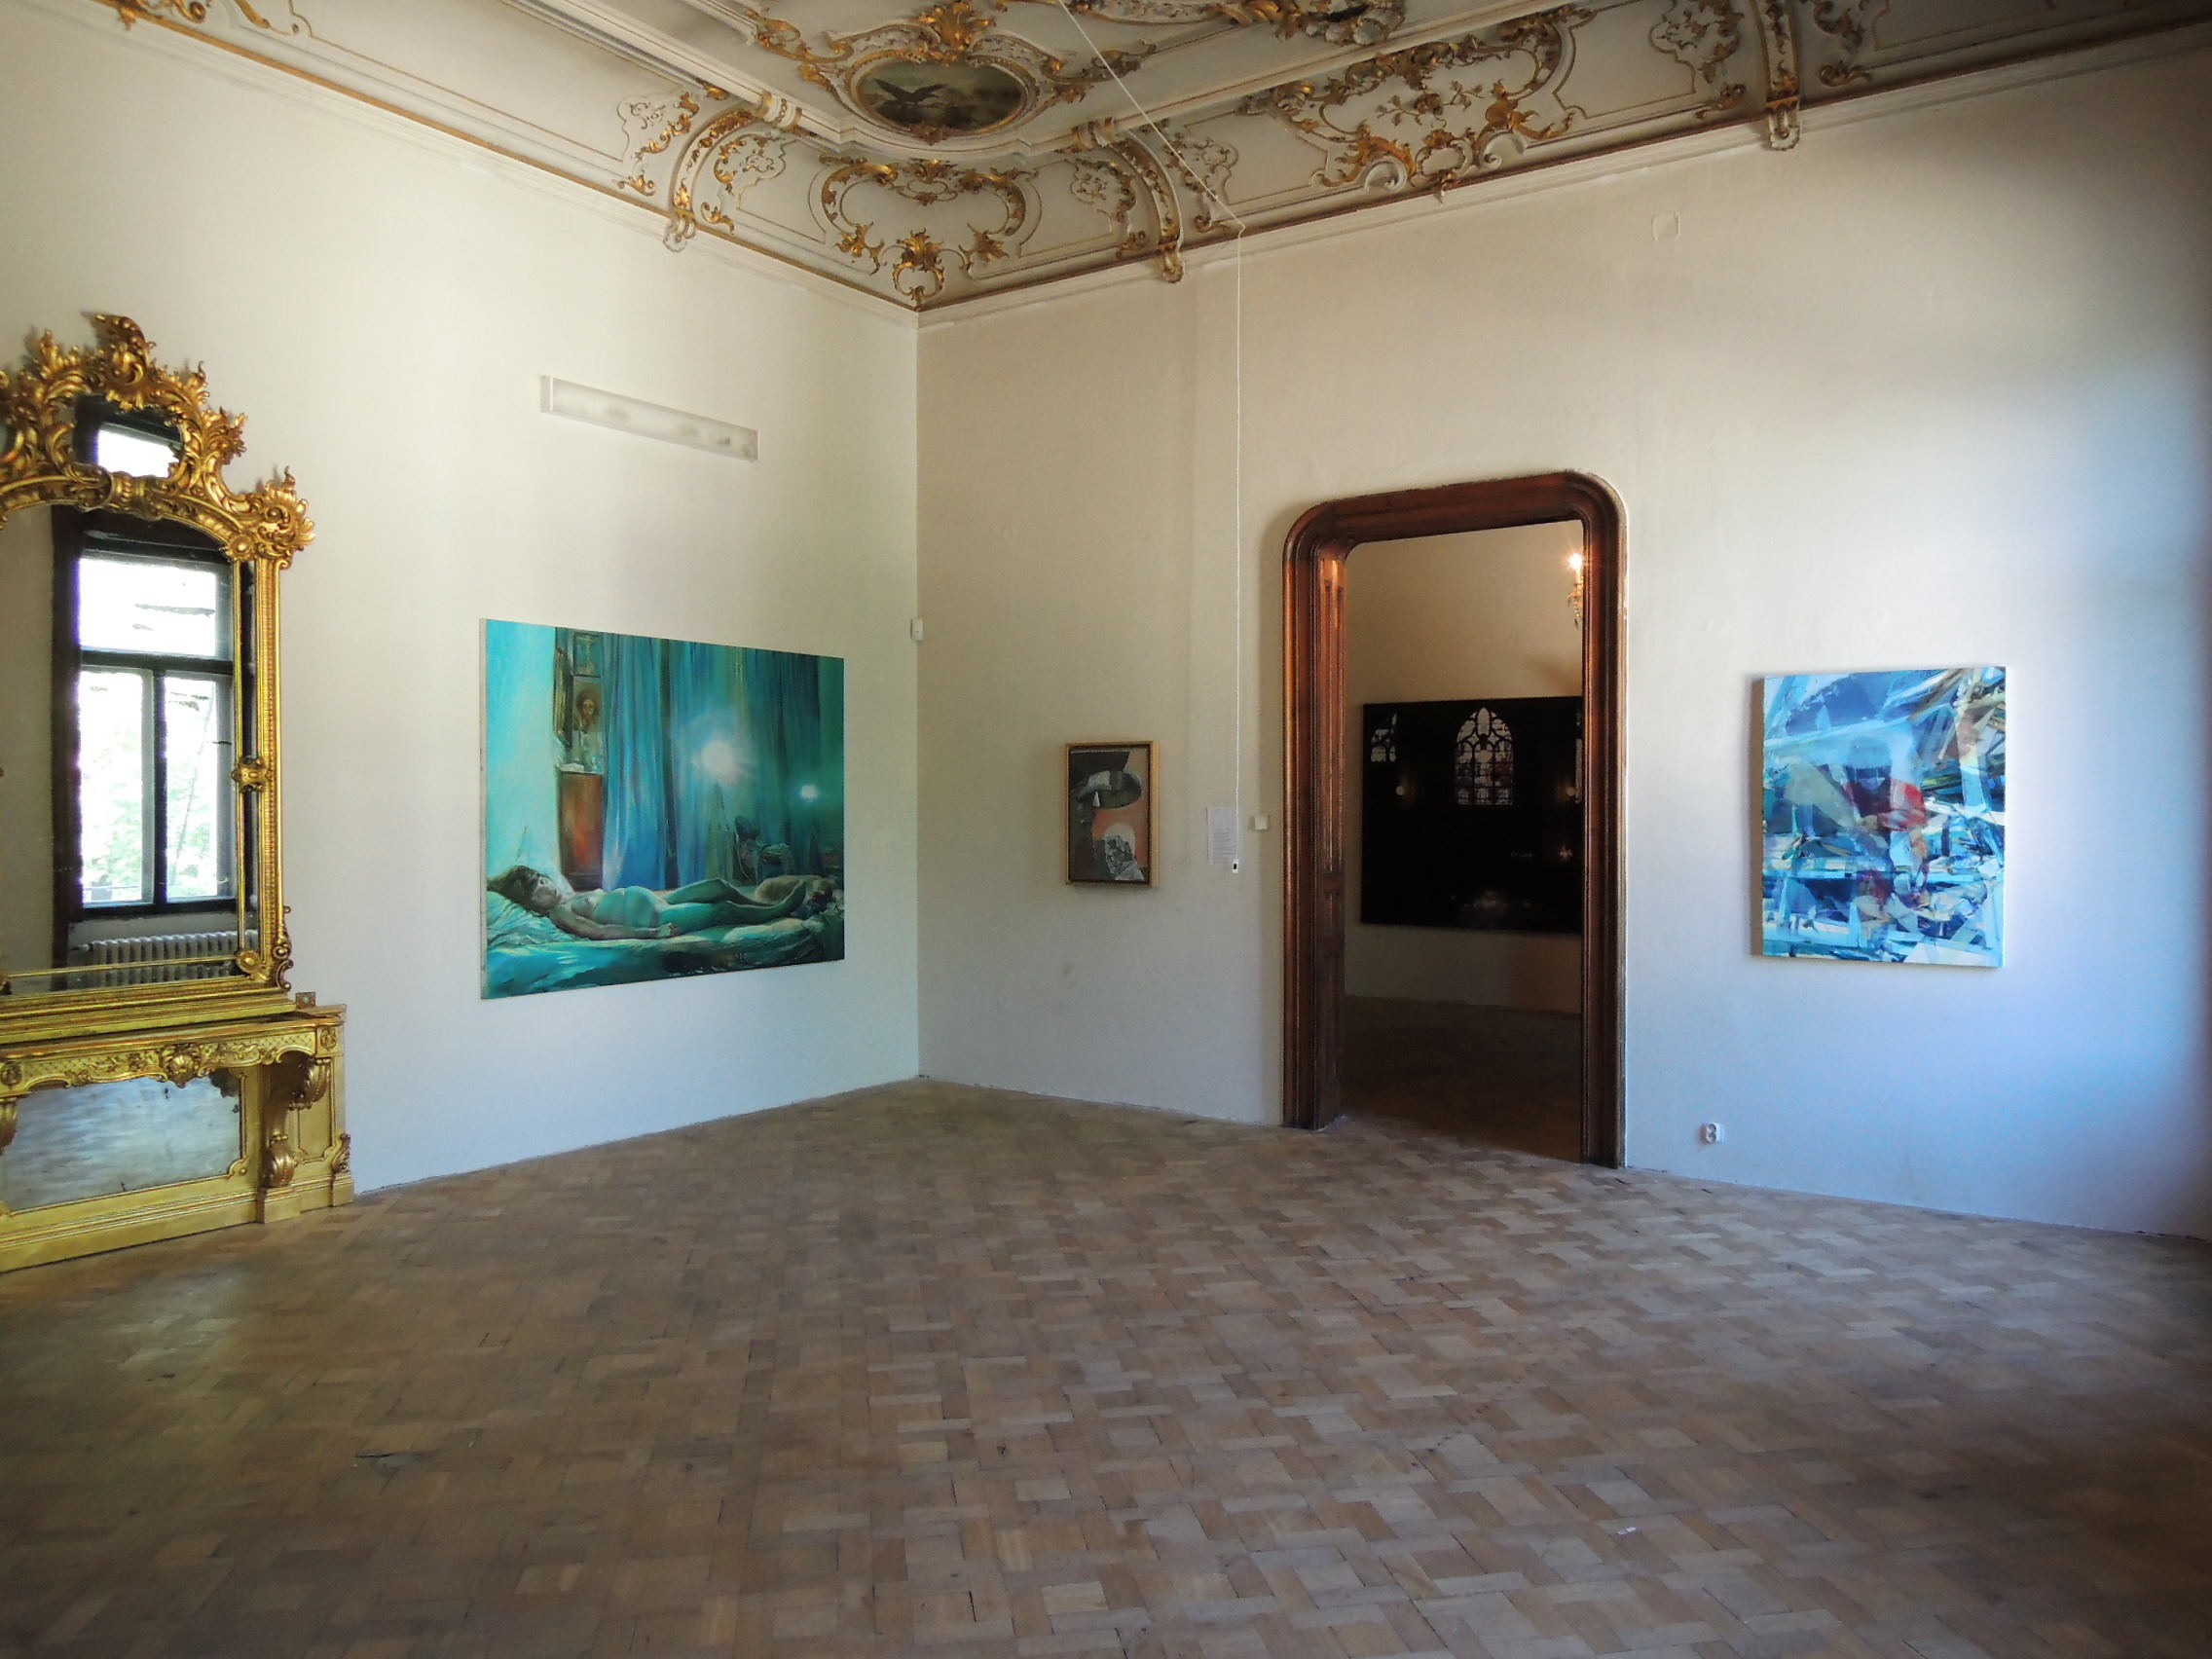   La Belle Peinture 2 , Bratislava (SK), Pisztory Palace.&nbsp;Curators : Eva Hober and Ivan Jançar.&nbsp;Artists in view: Axel Pahlavi, Duncan Wylie 